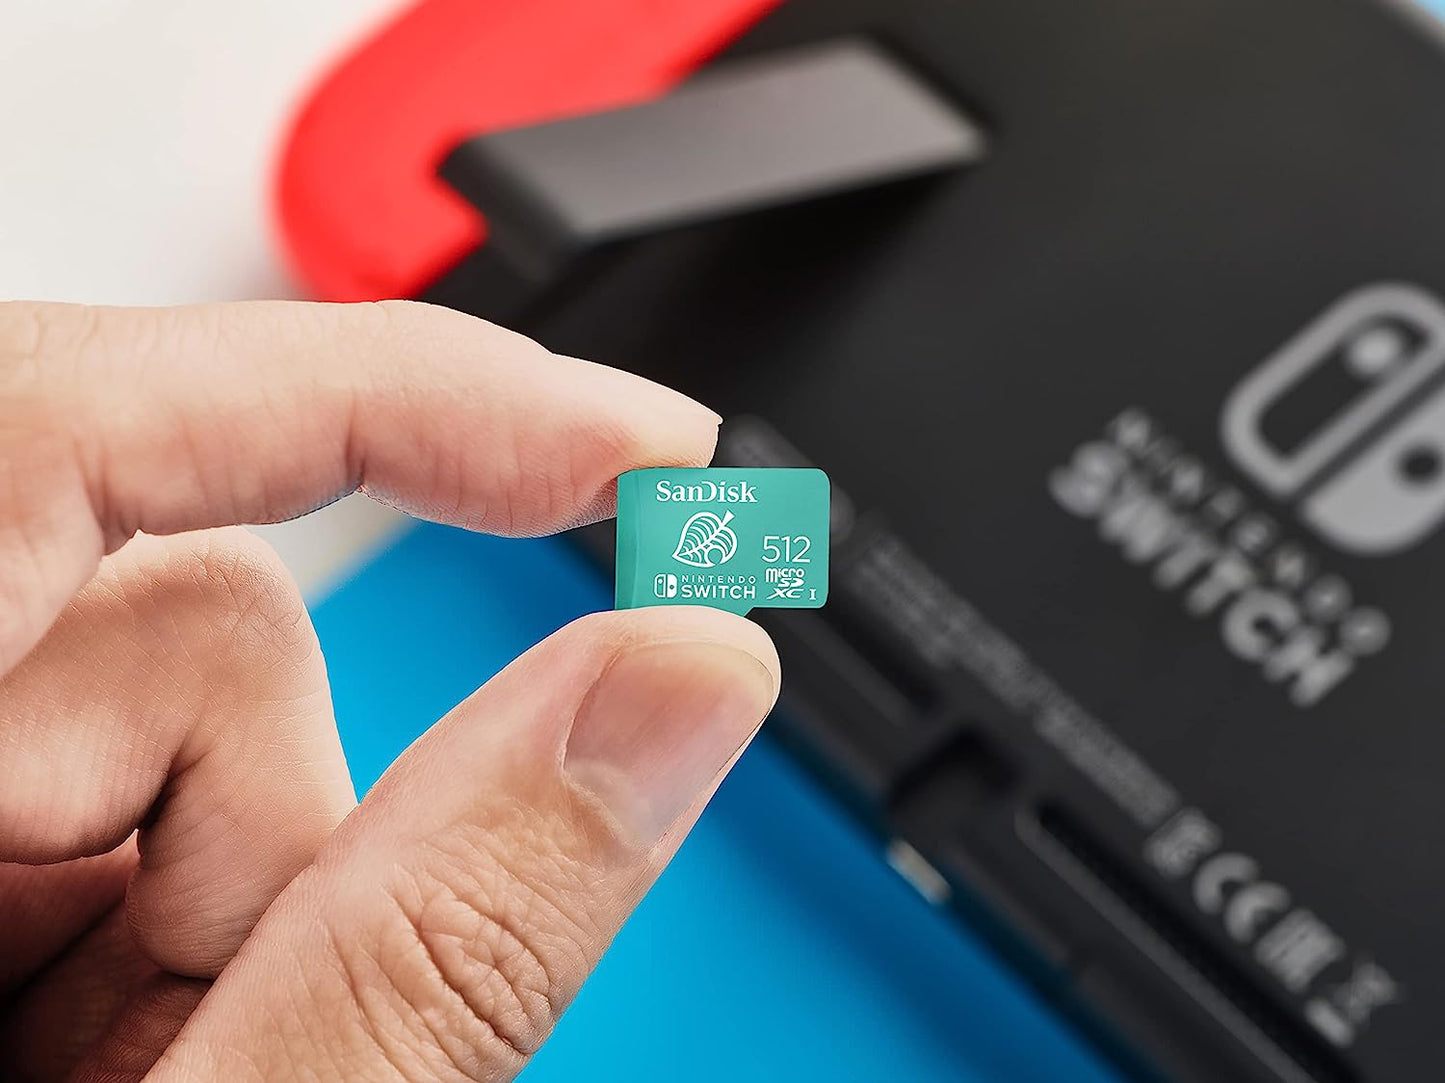 SanDisk 512GB microSDXC-Card, Licensed for Nintendo-Switch - SDSQXAO-512G-GNCZN